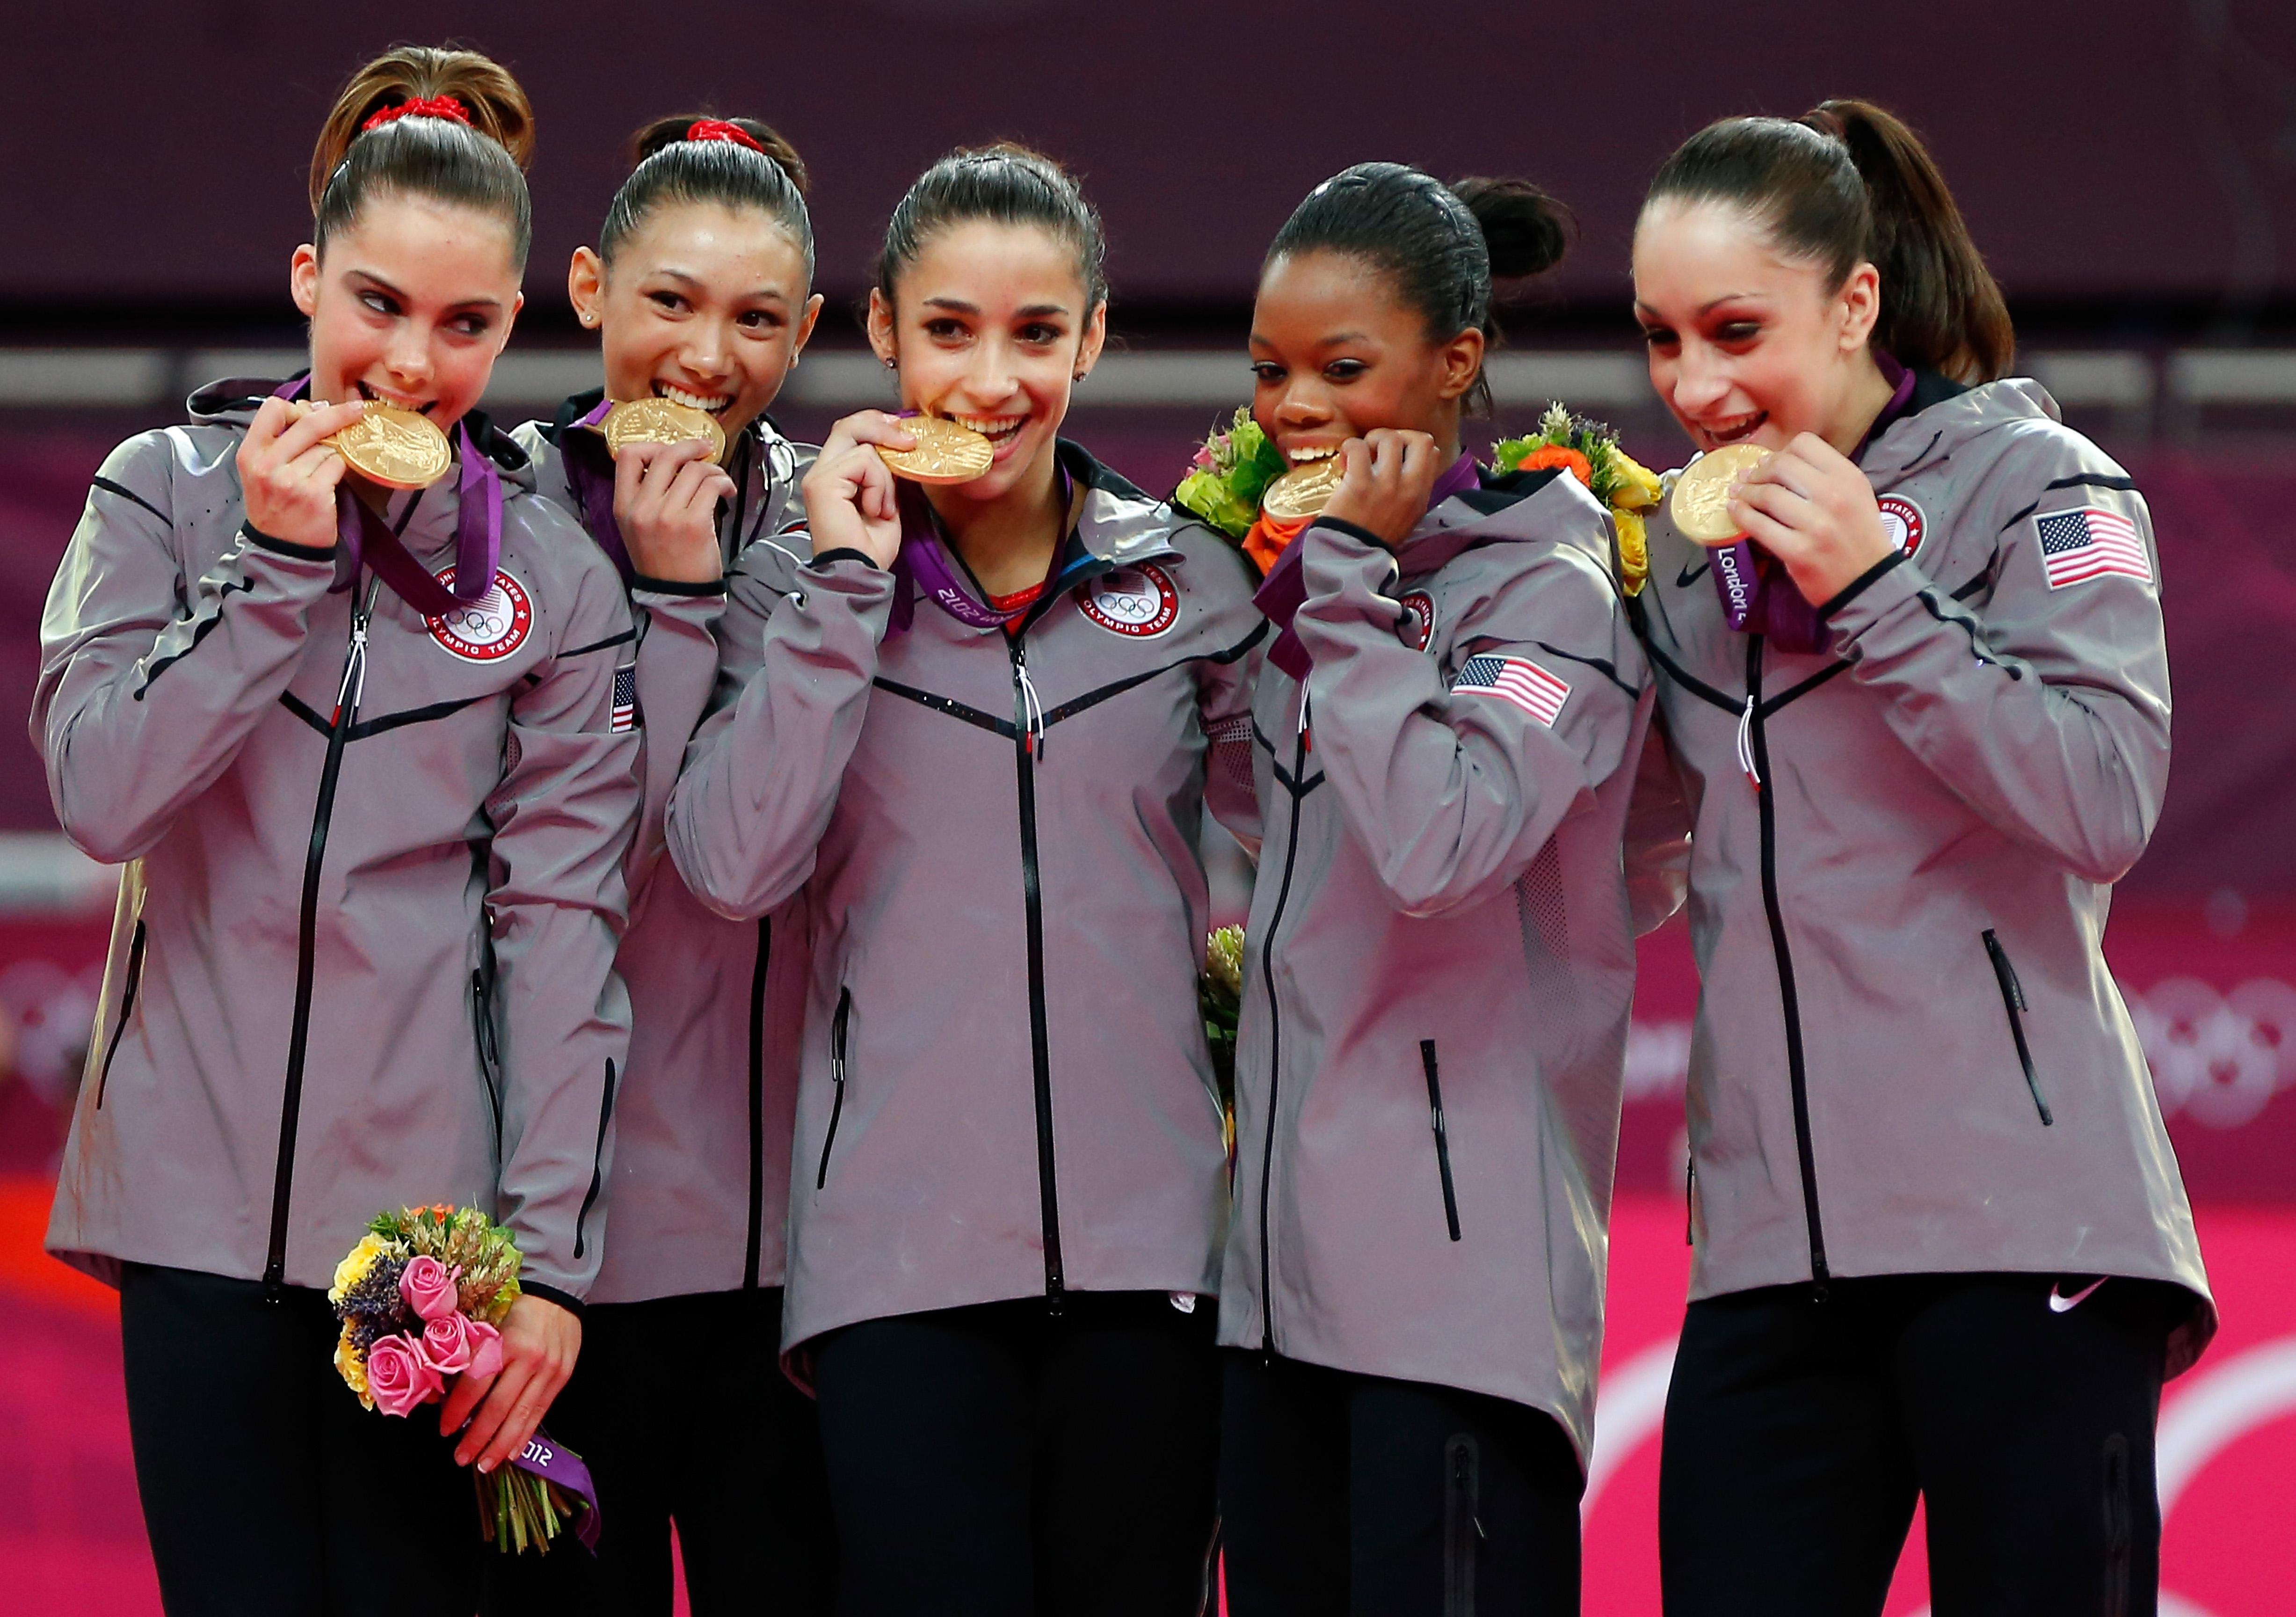 2012 Olympics gymnastics: The pure joy of watching the Fab Five, America's  greatest women's gymnastics team.